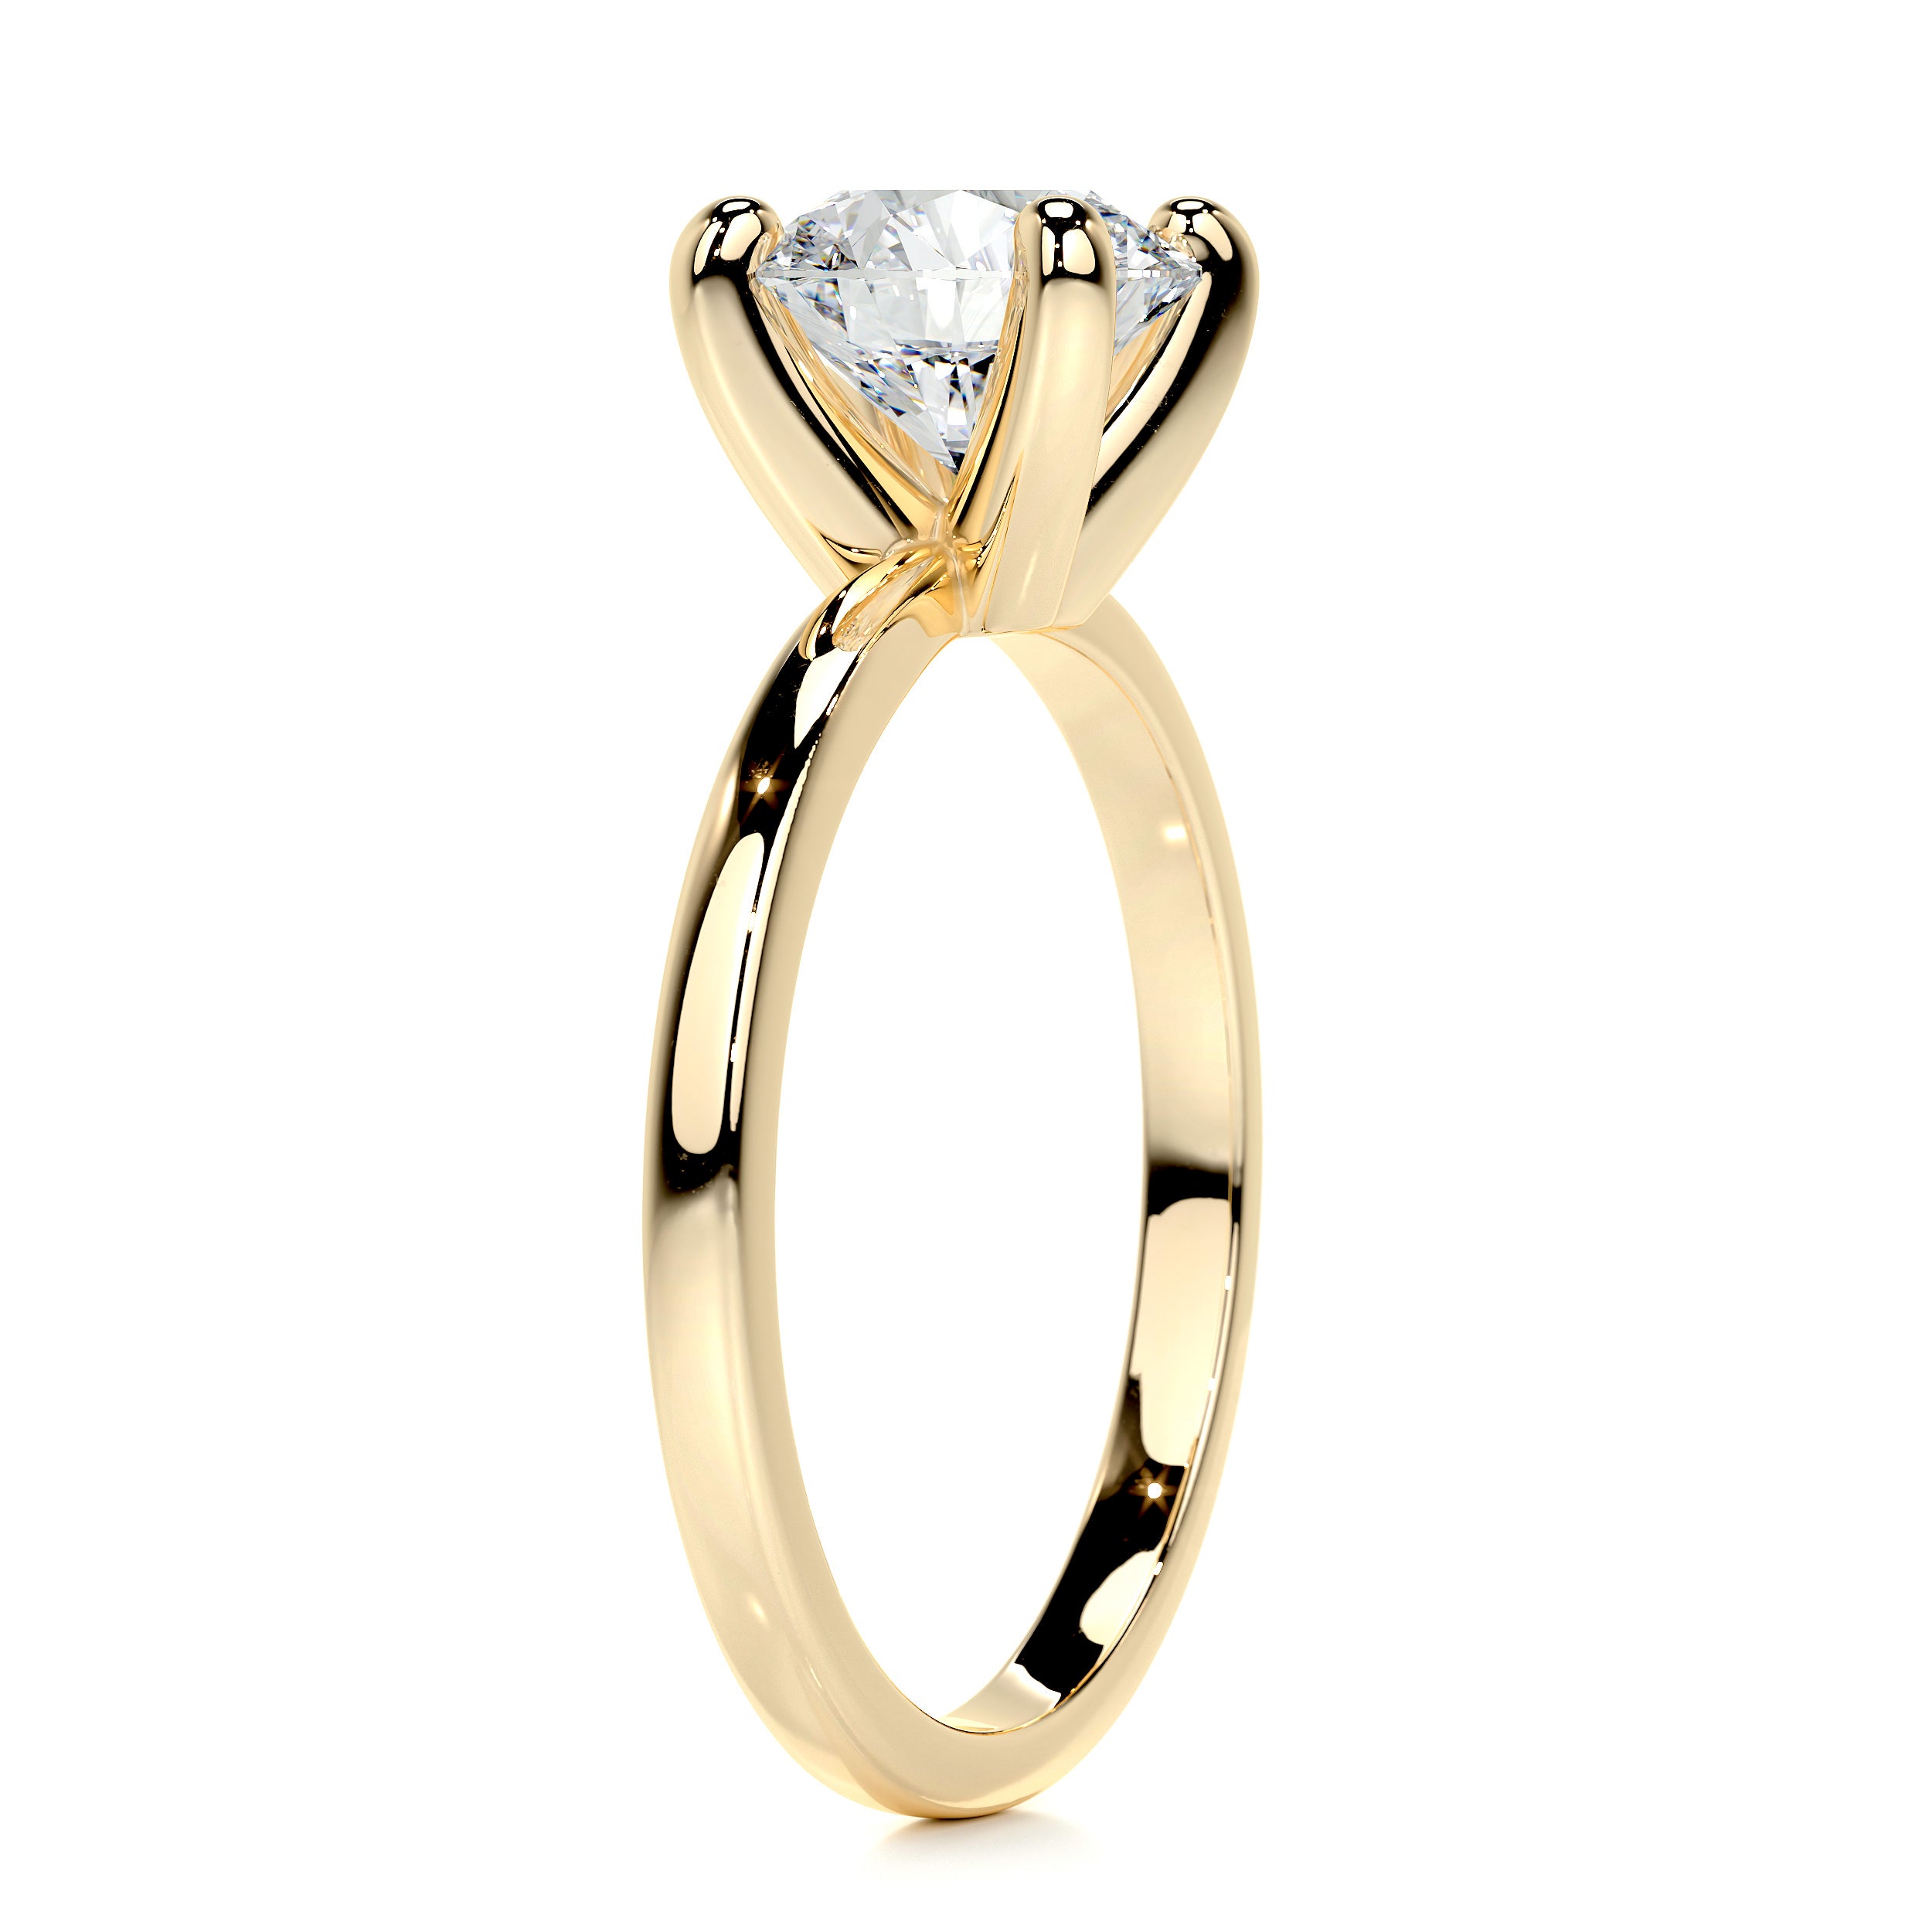 Jessica Diamond Engagement Ring   (1.5 Carat) -18K Yellow Gold